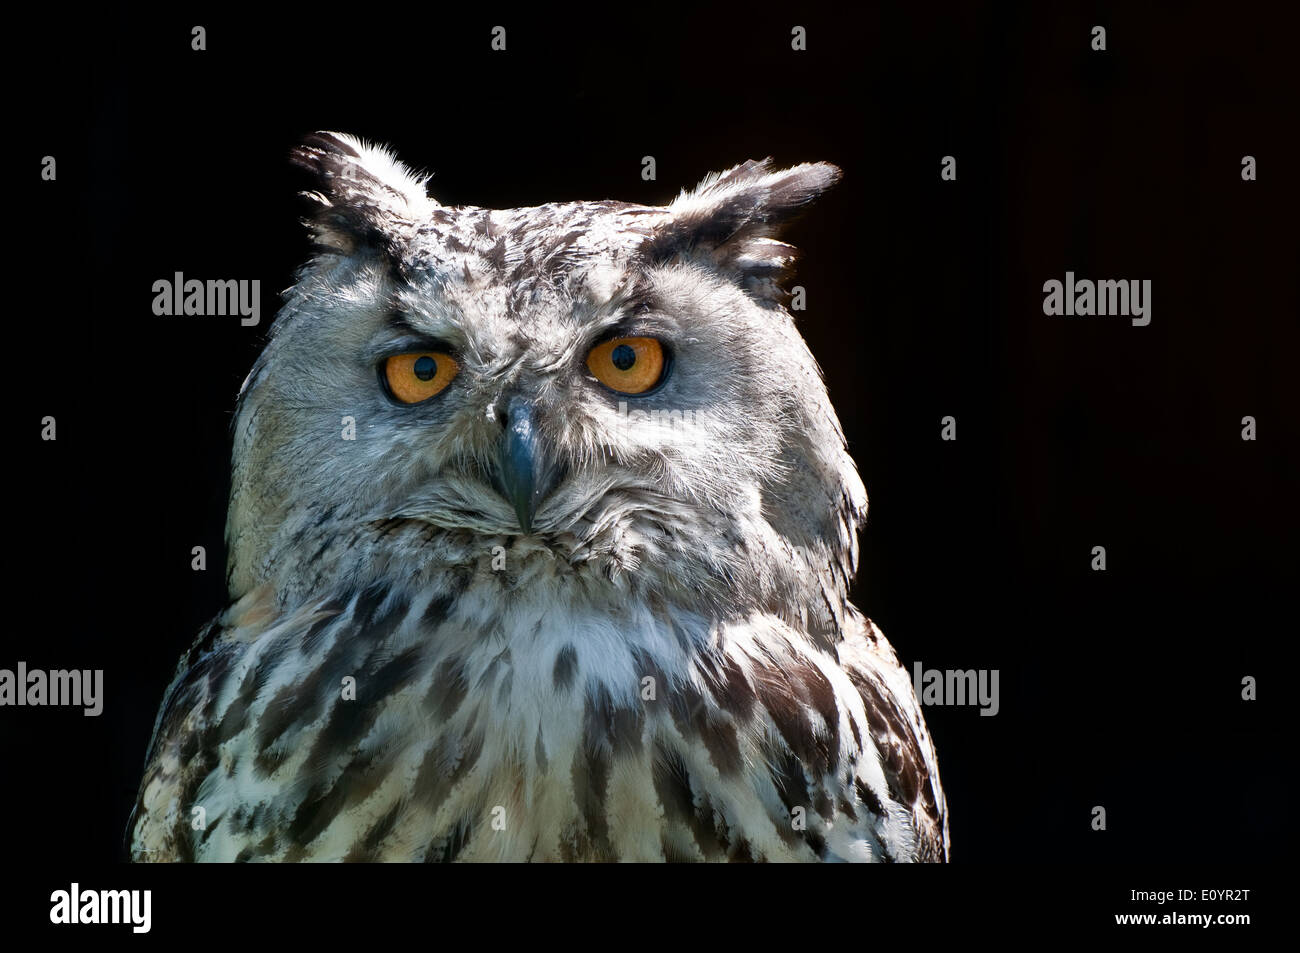 Eagle owl (Bubo bubo) portrait on dark background Stock Photo